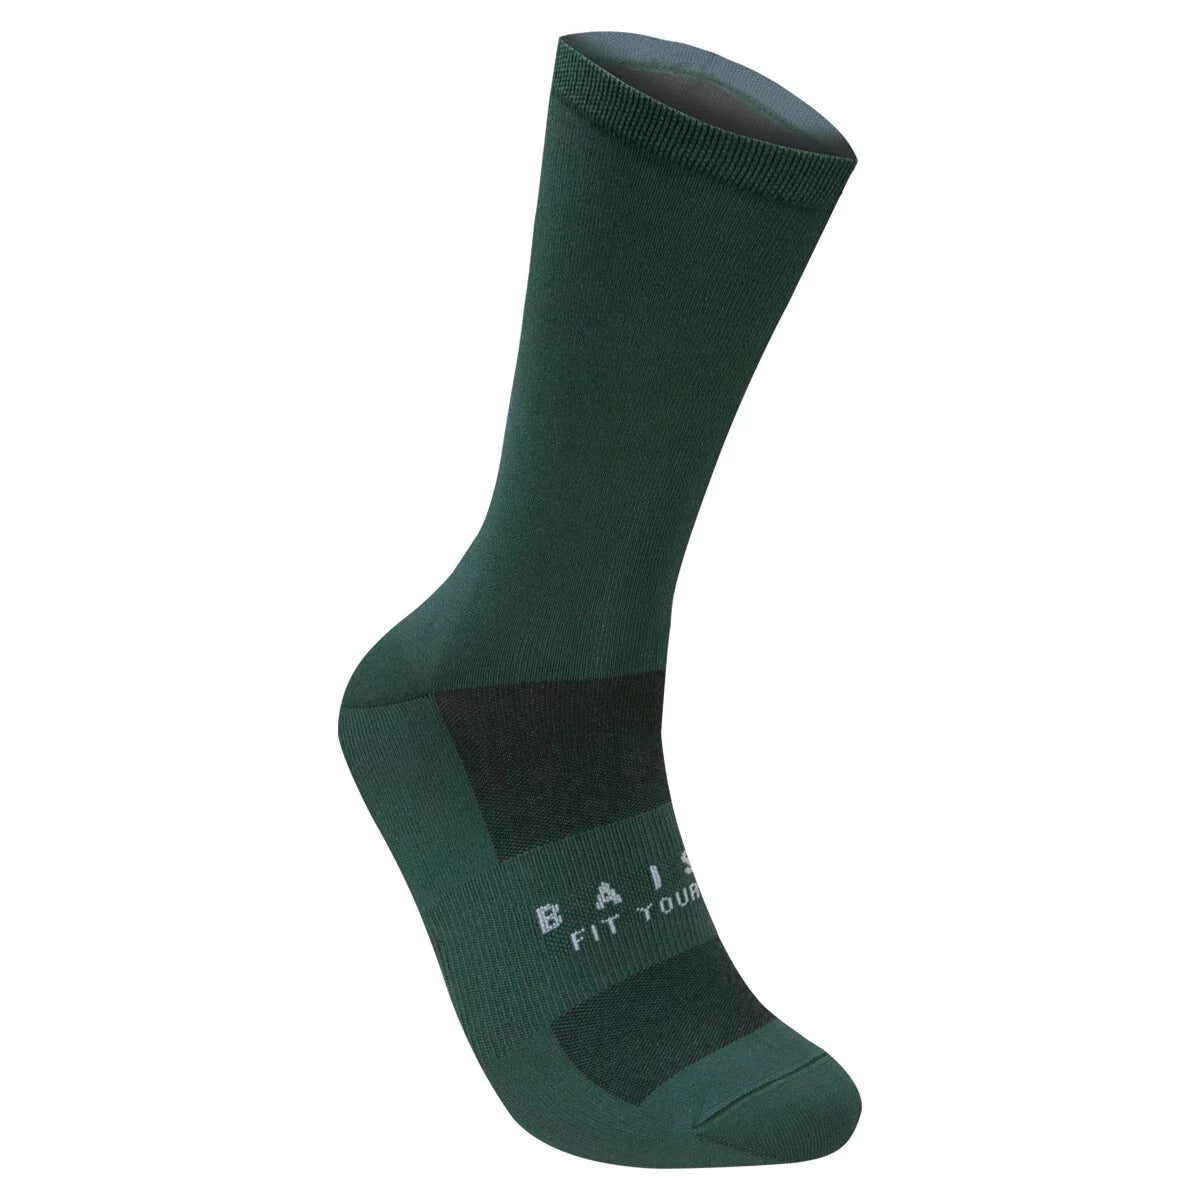 Baisky Premium Cycling Socks - TRSS129 Purity Dark Green